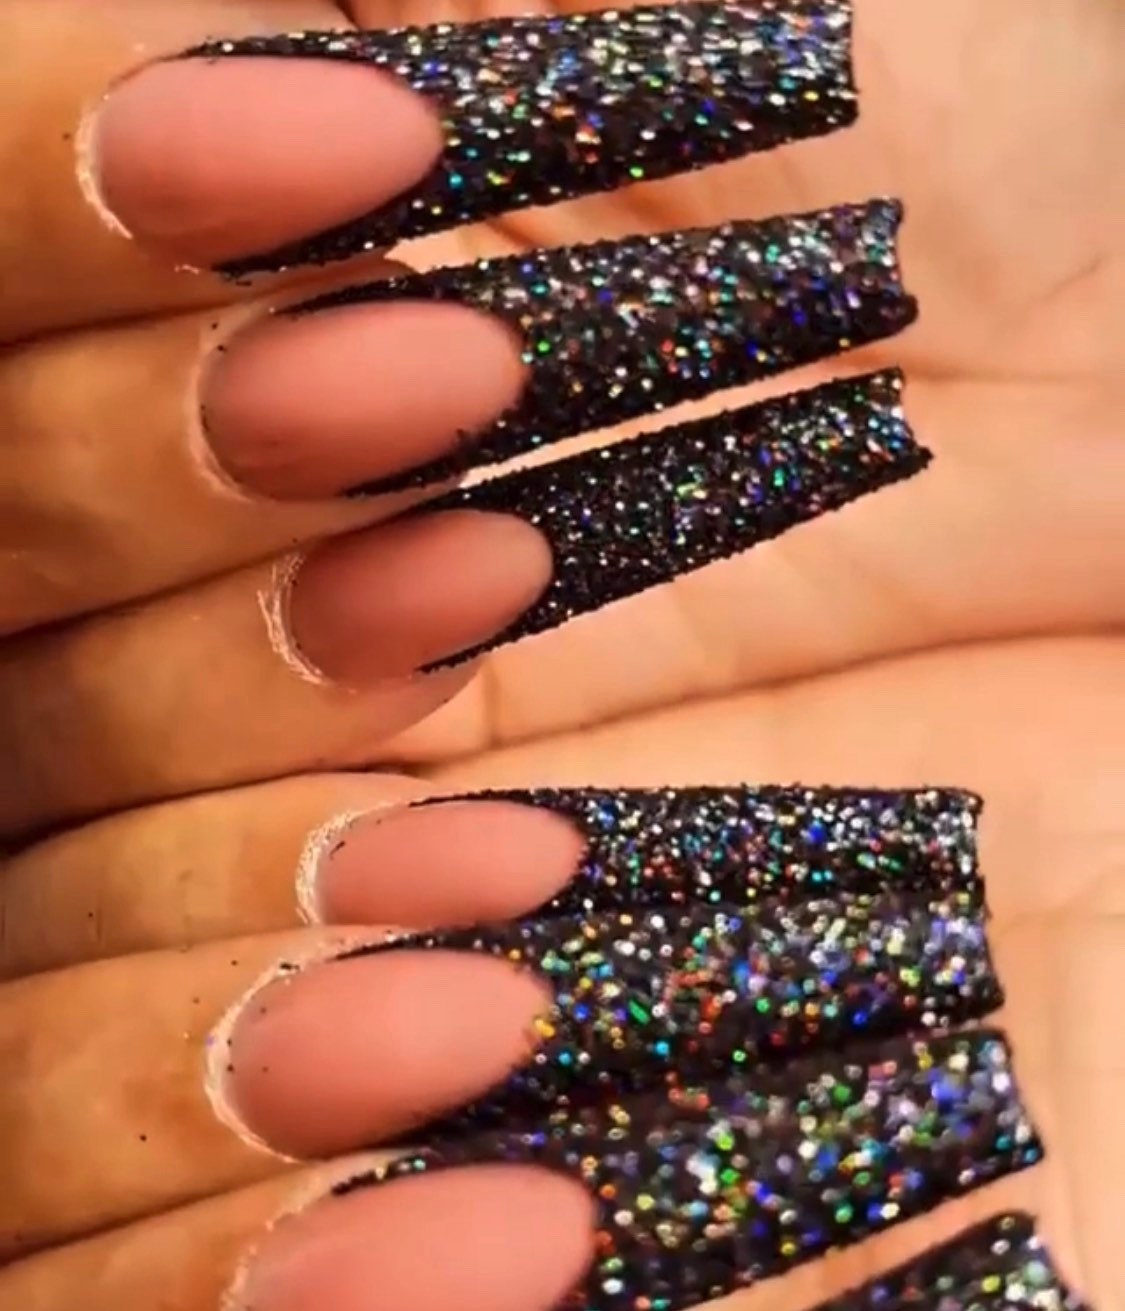 HOLO MERMAID NAILS DIY - UV RESIN fake gel nails, cheap, glitter 